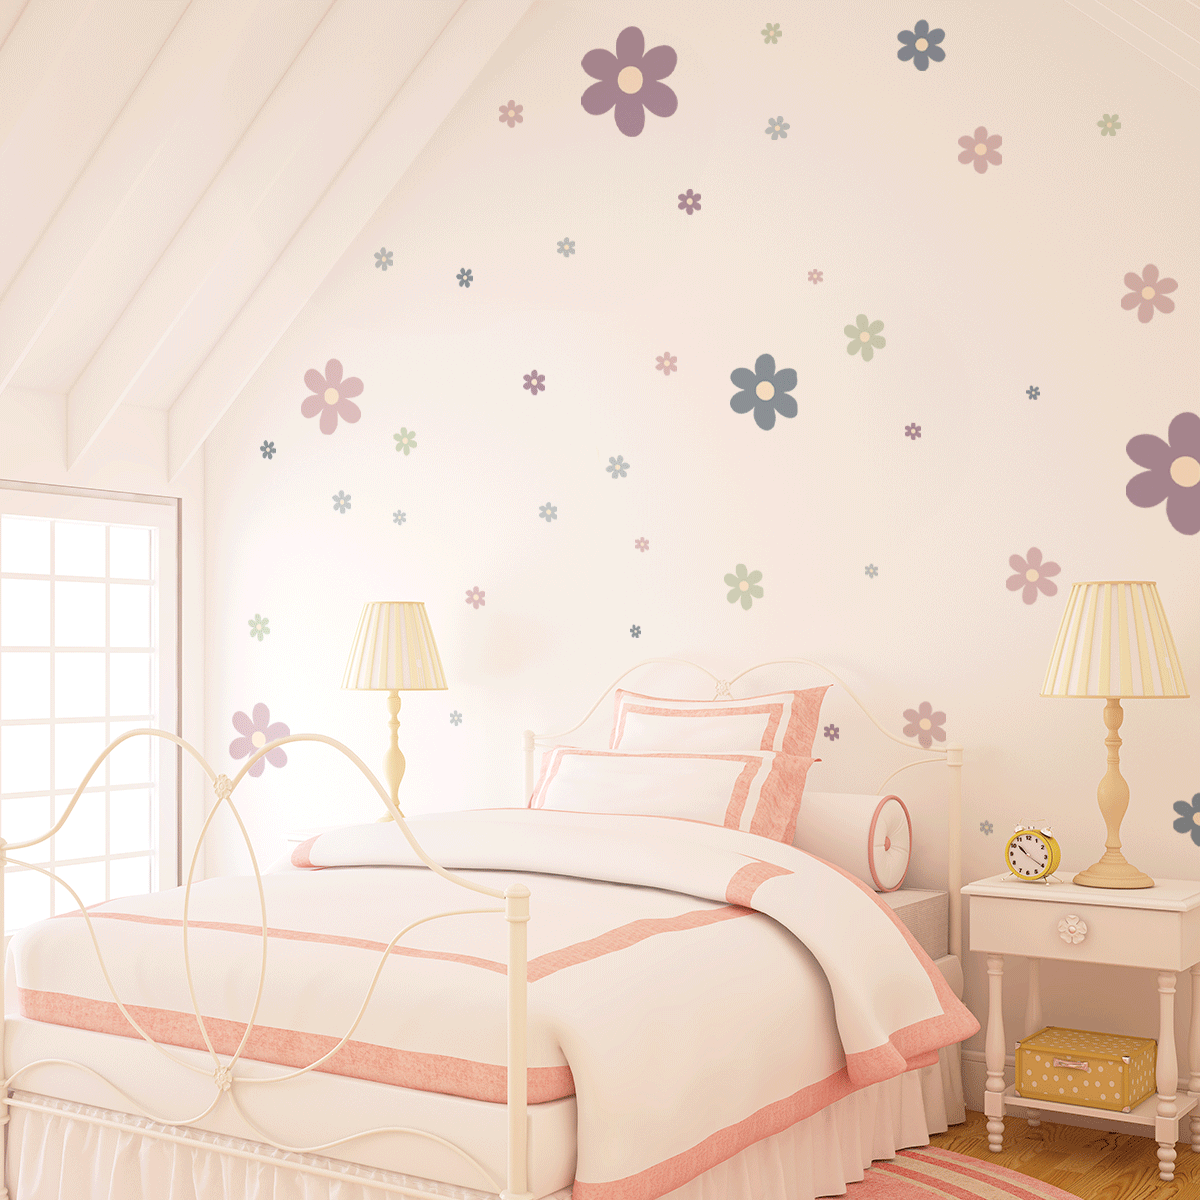 Flower wall stickers - Happy blooms (lavendel dream)